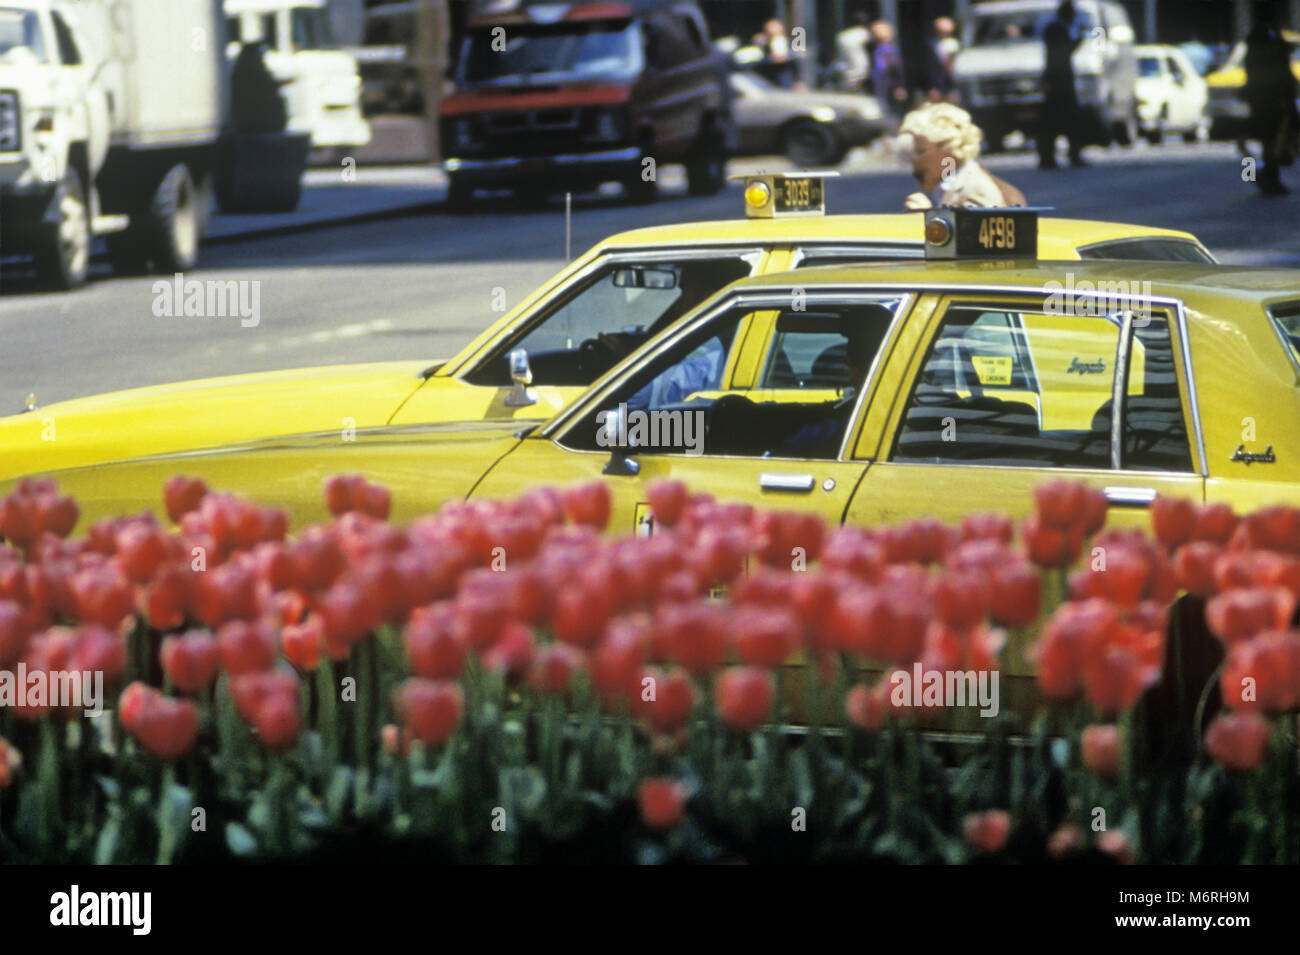 1987 CHEVROLET IMPALA HISTORIQUE Les taxis jaunes (©GENERAL MOTORS CORP  1985) PARK AVENUE MANHATTAN NEW YORK USA Photo Stock - Alamy